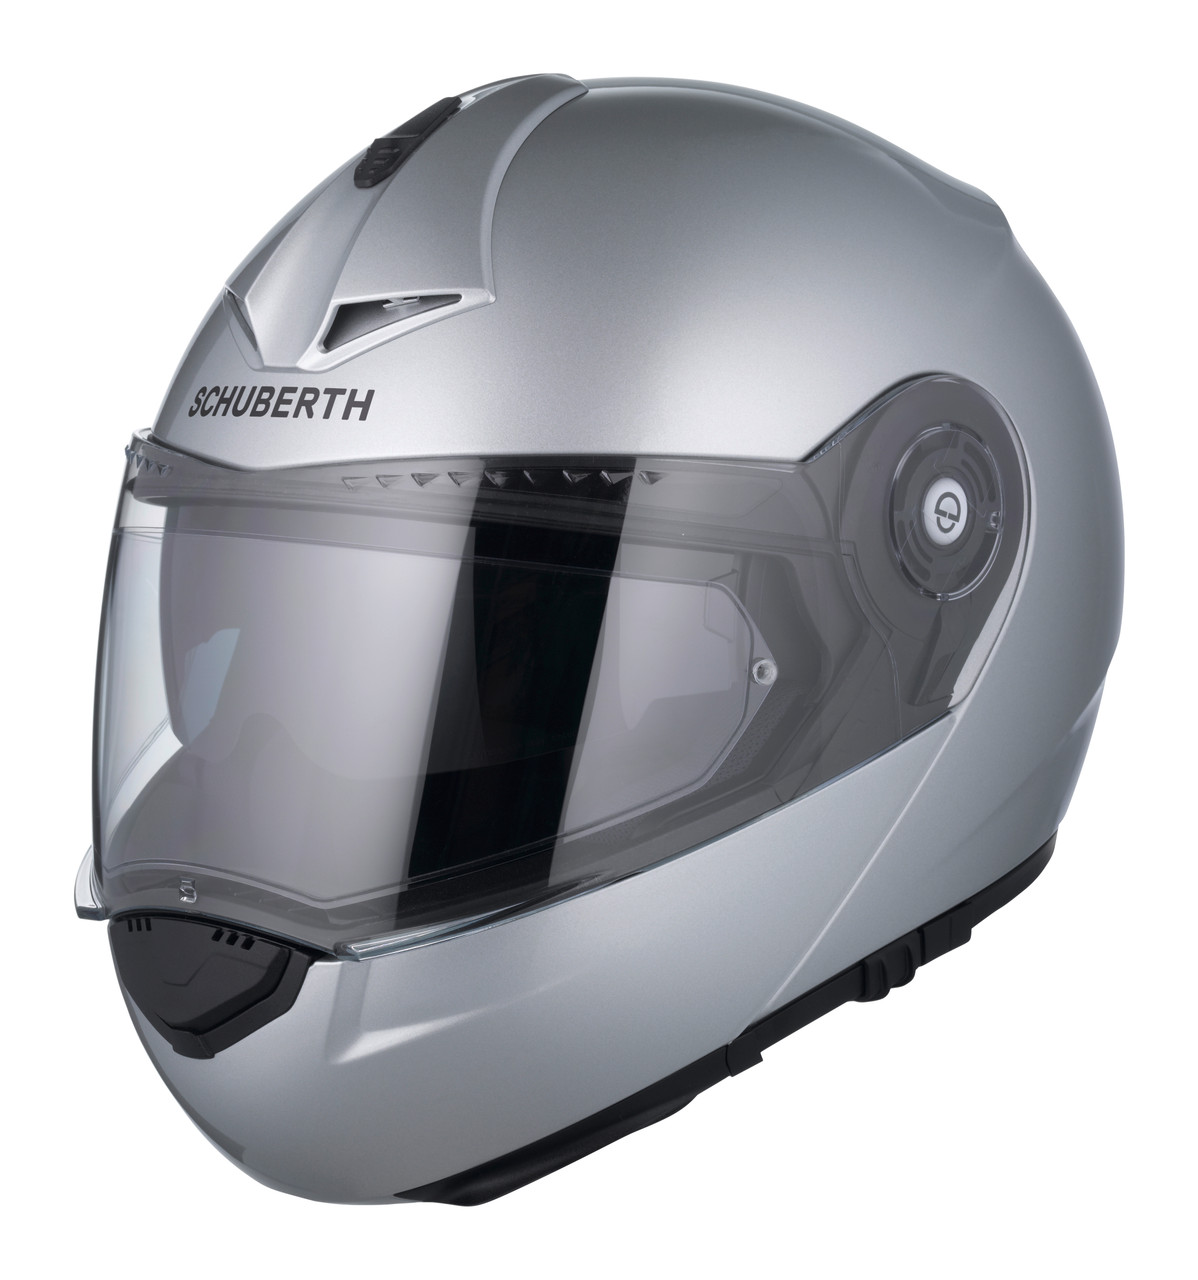 Verbinding verbroken Kast verdund Schuberth C3 Pro Modular Helmet | BMW Motorcycles Southeast Michigan